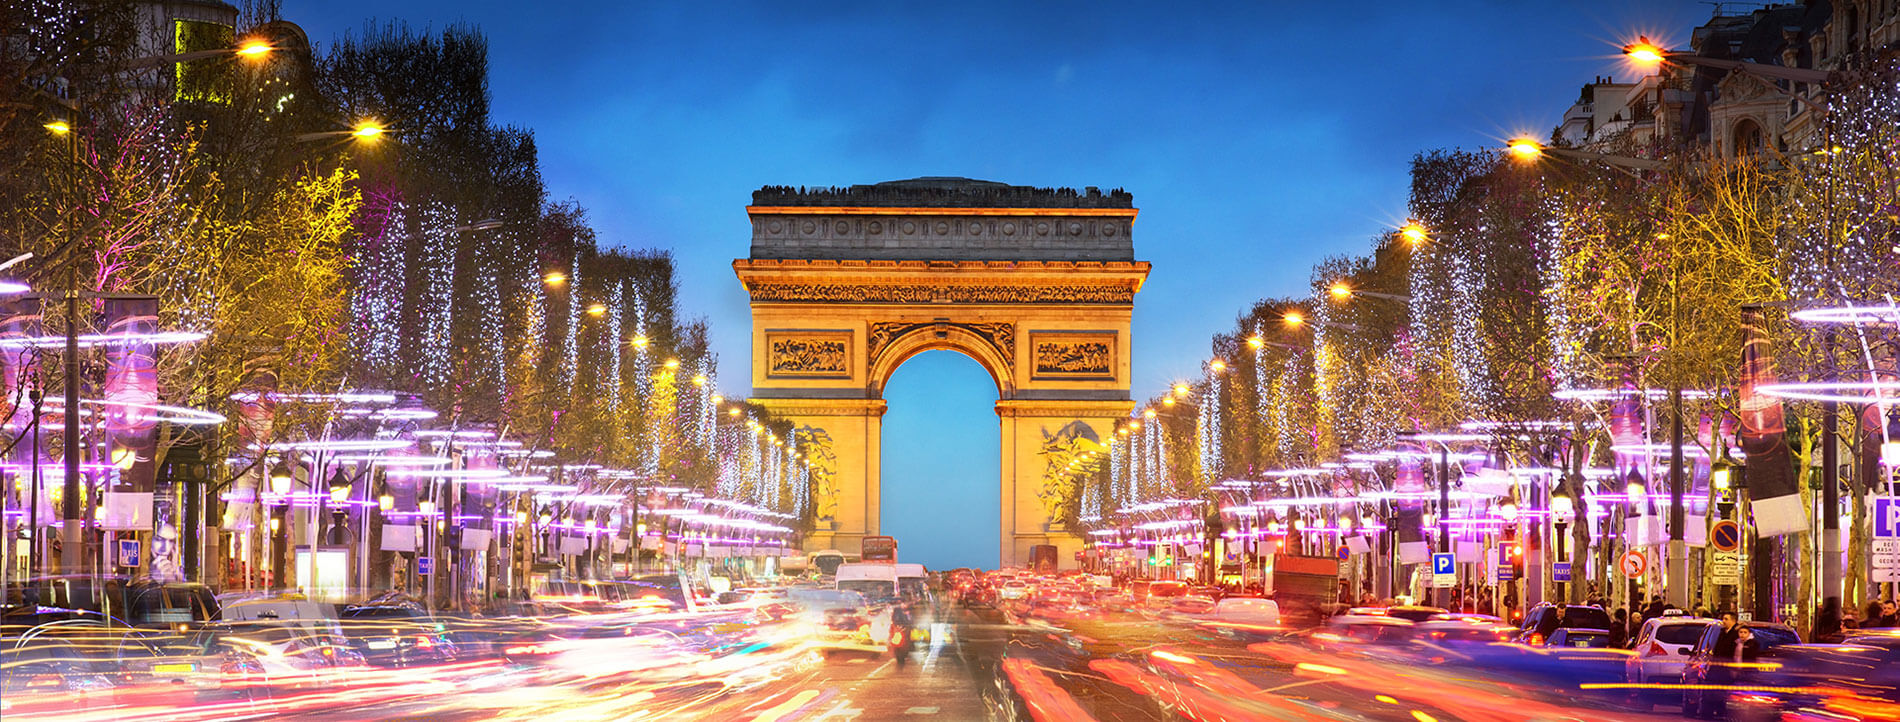 Paris Travel Package - TGW Travel Group